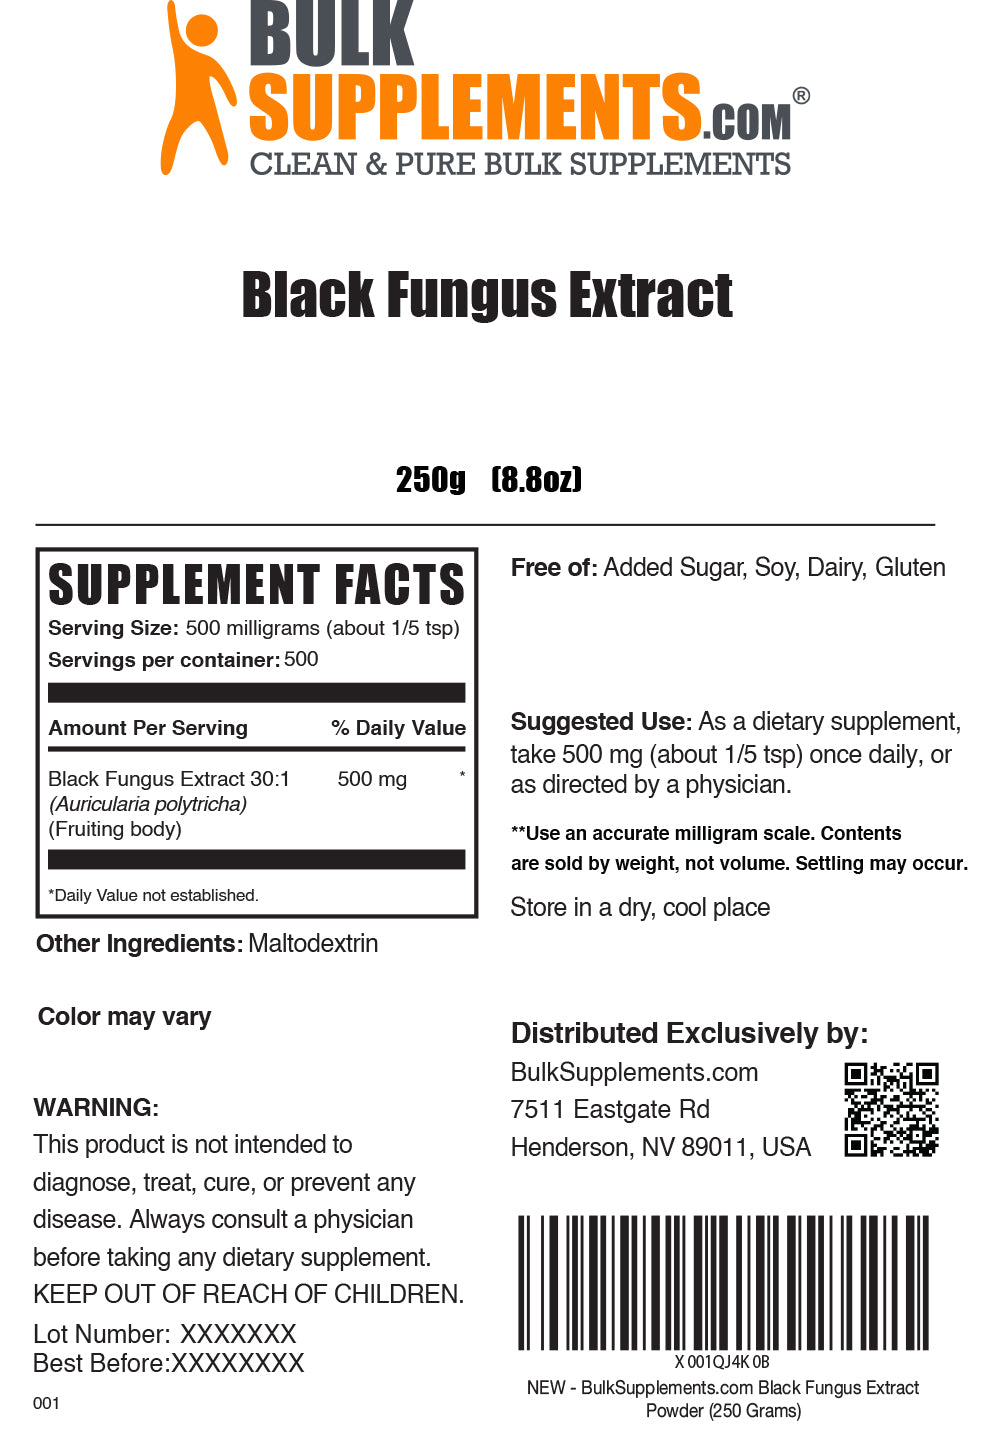 Black fungus mushroom extract powder label 250g